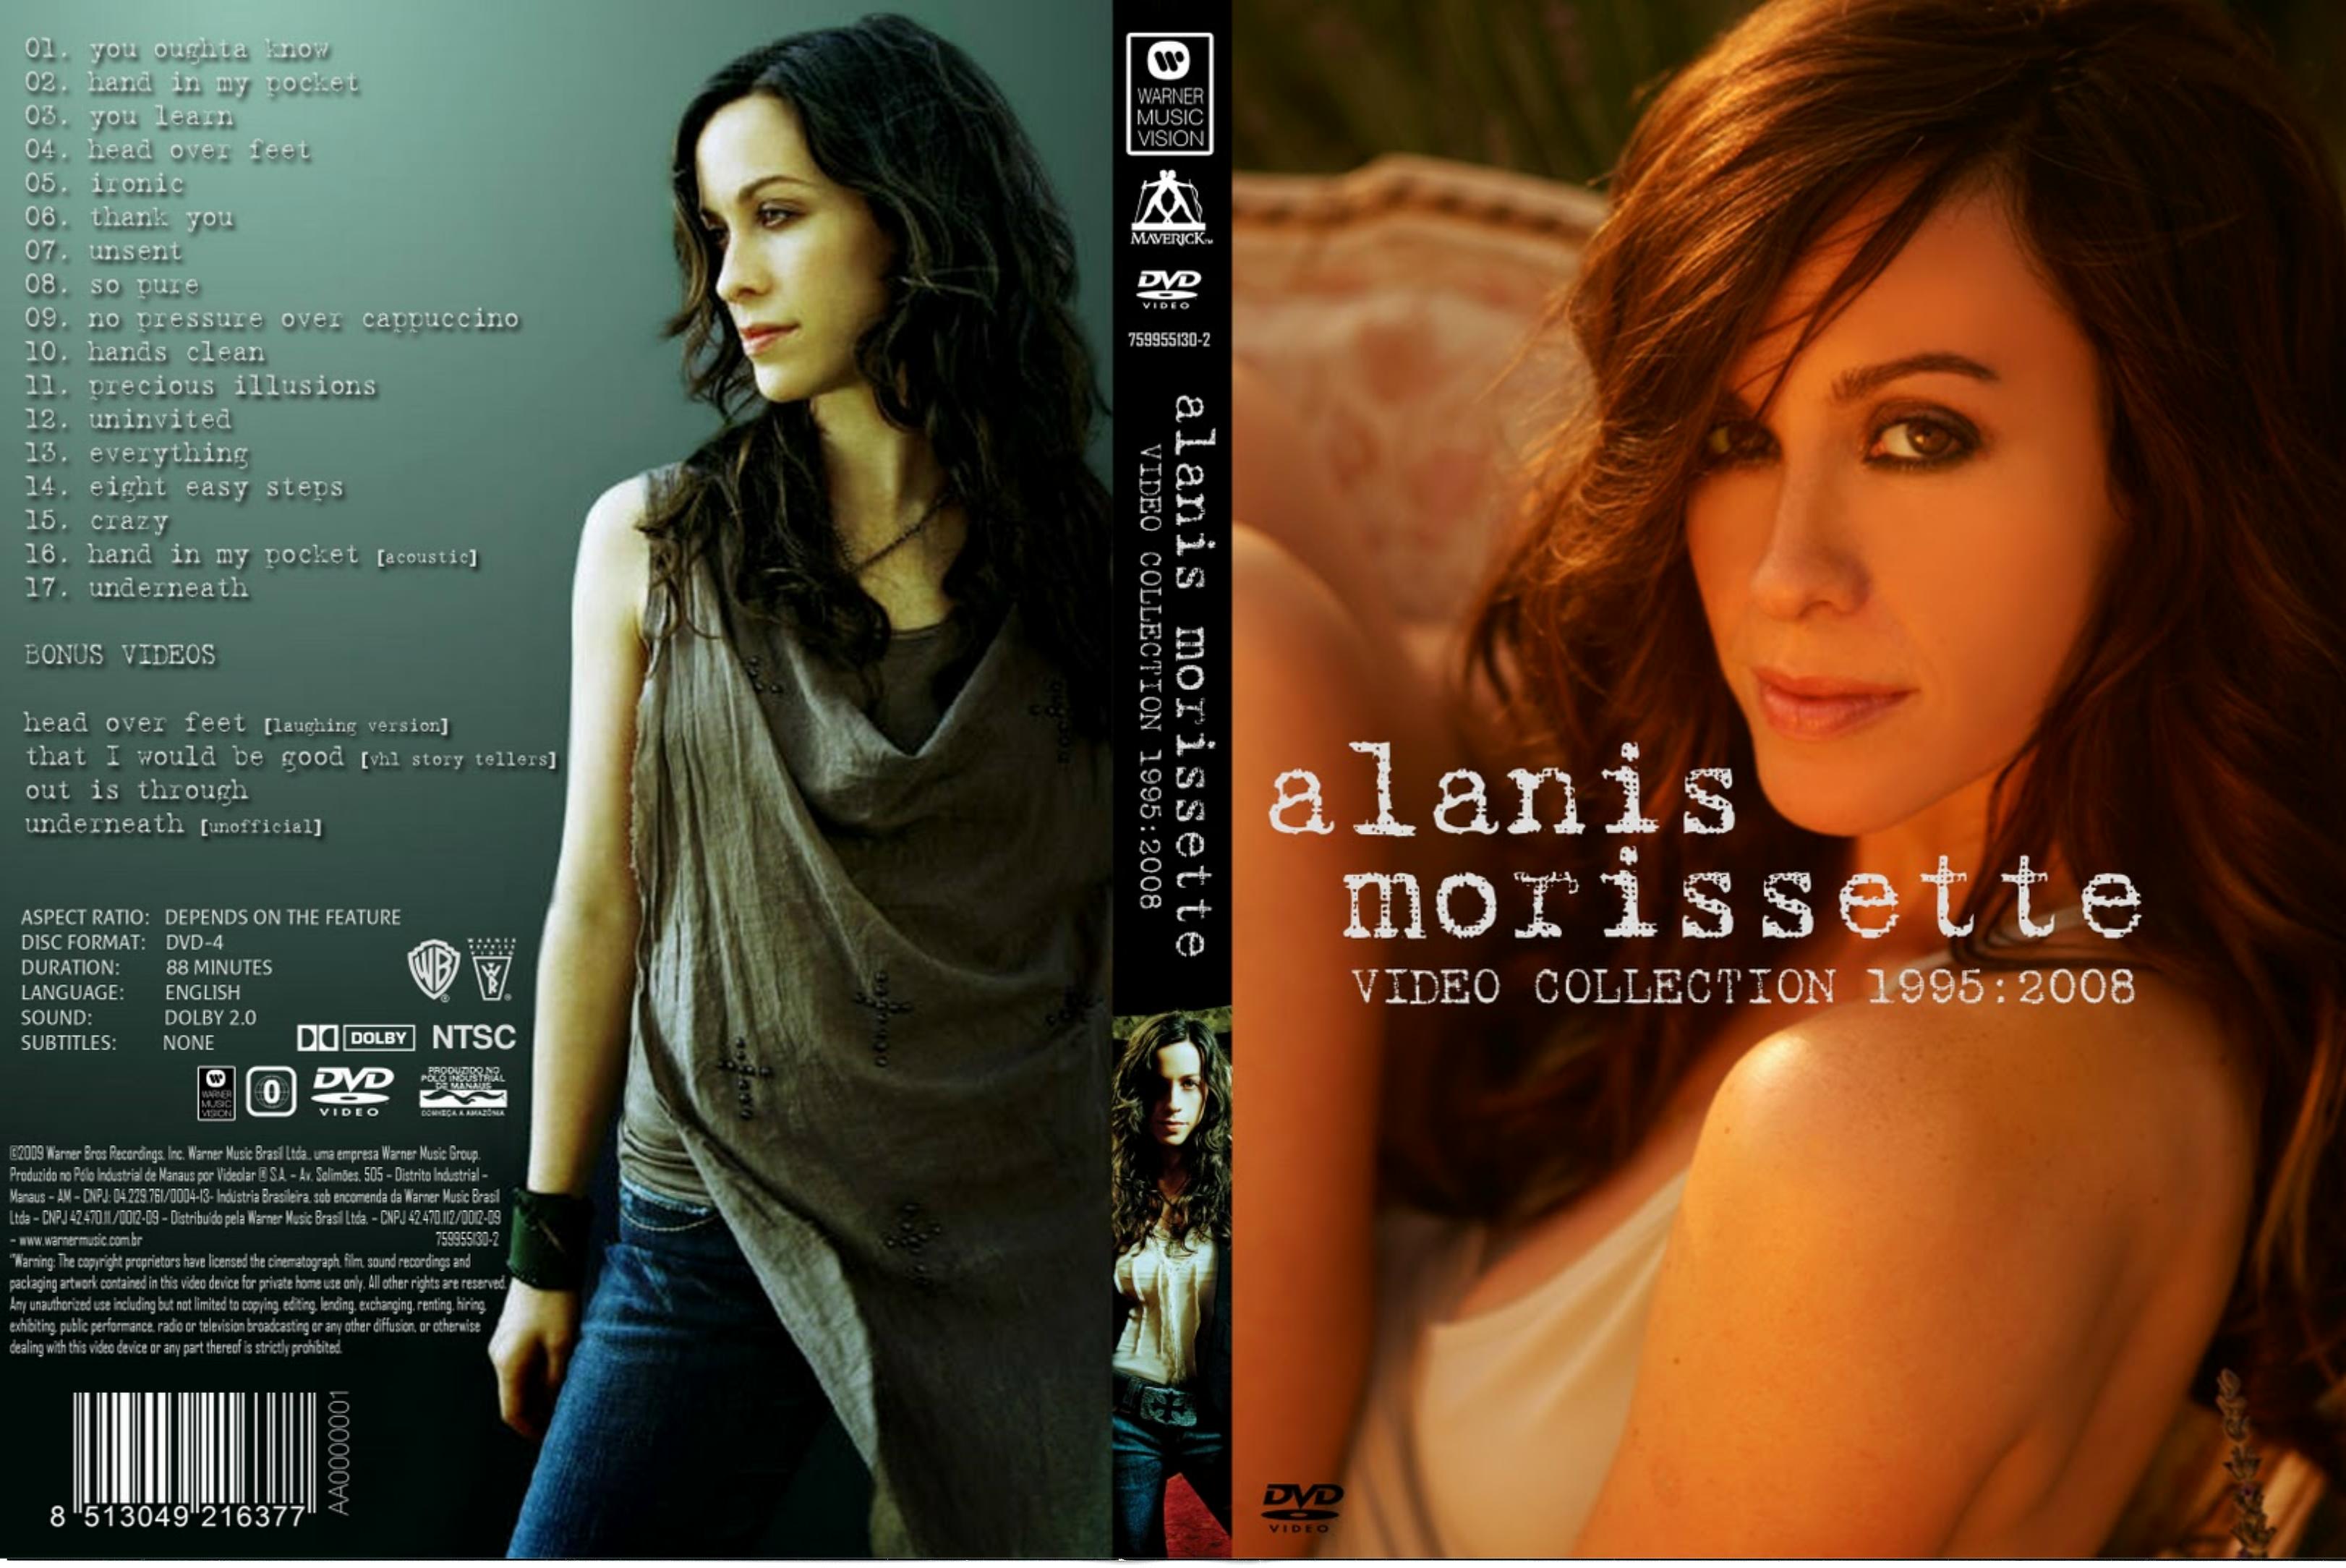 Jaquette DVD Alanis Morissette Video Collection custom